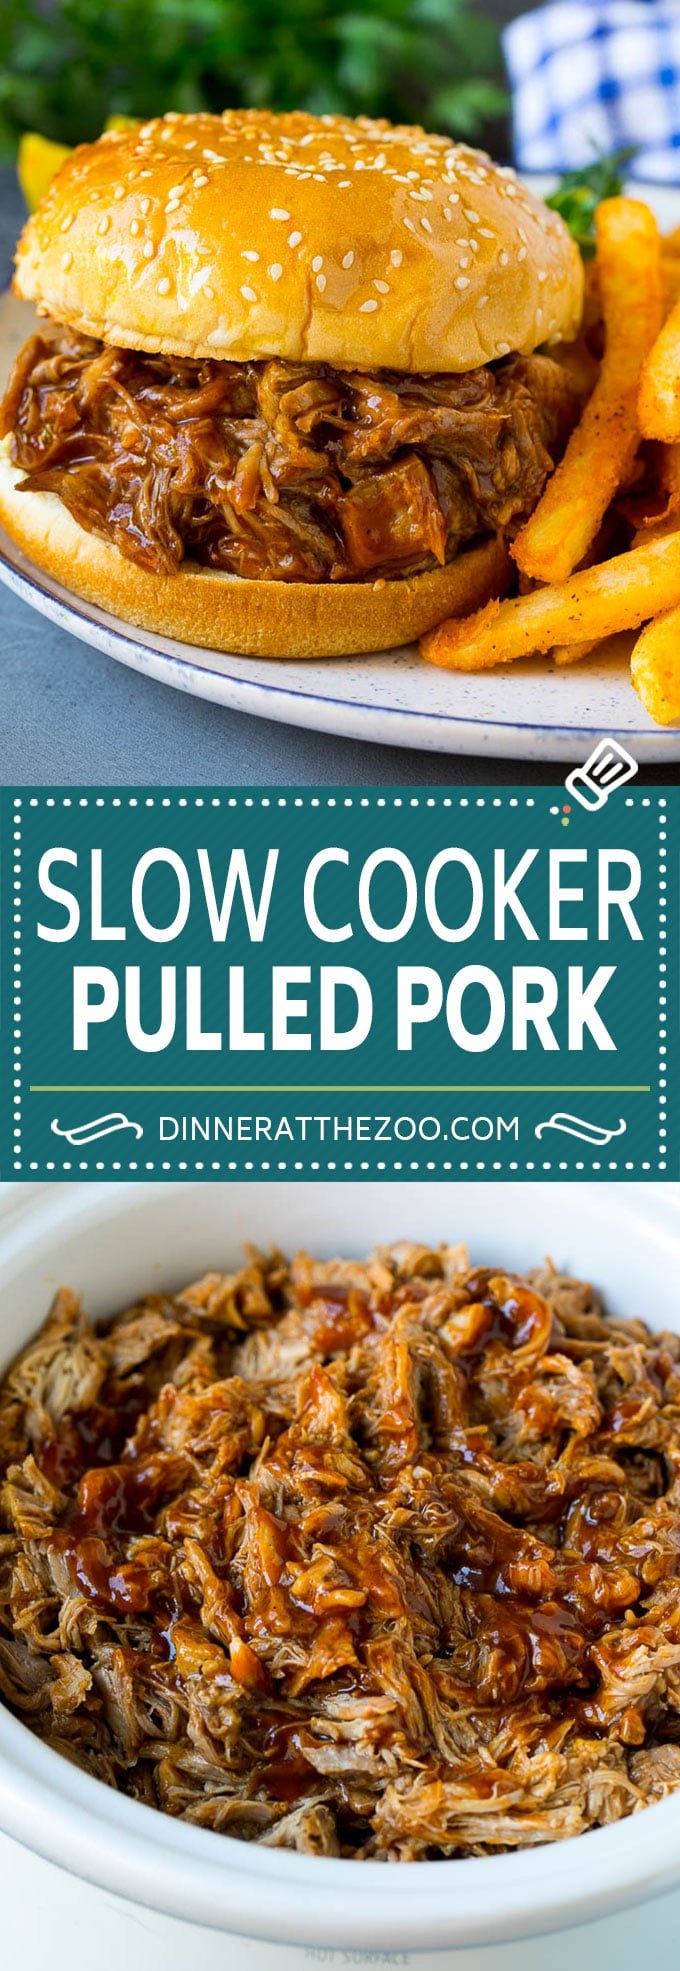 Slow Cooker Pulled Pork Recipe | Crock Pot Pulled Pork #pork #pulledpork #crockpot #slowcooker #dinner #dinneratthezoo